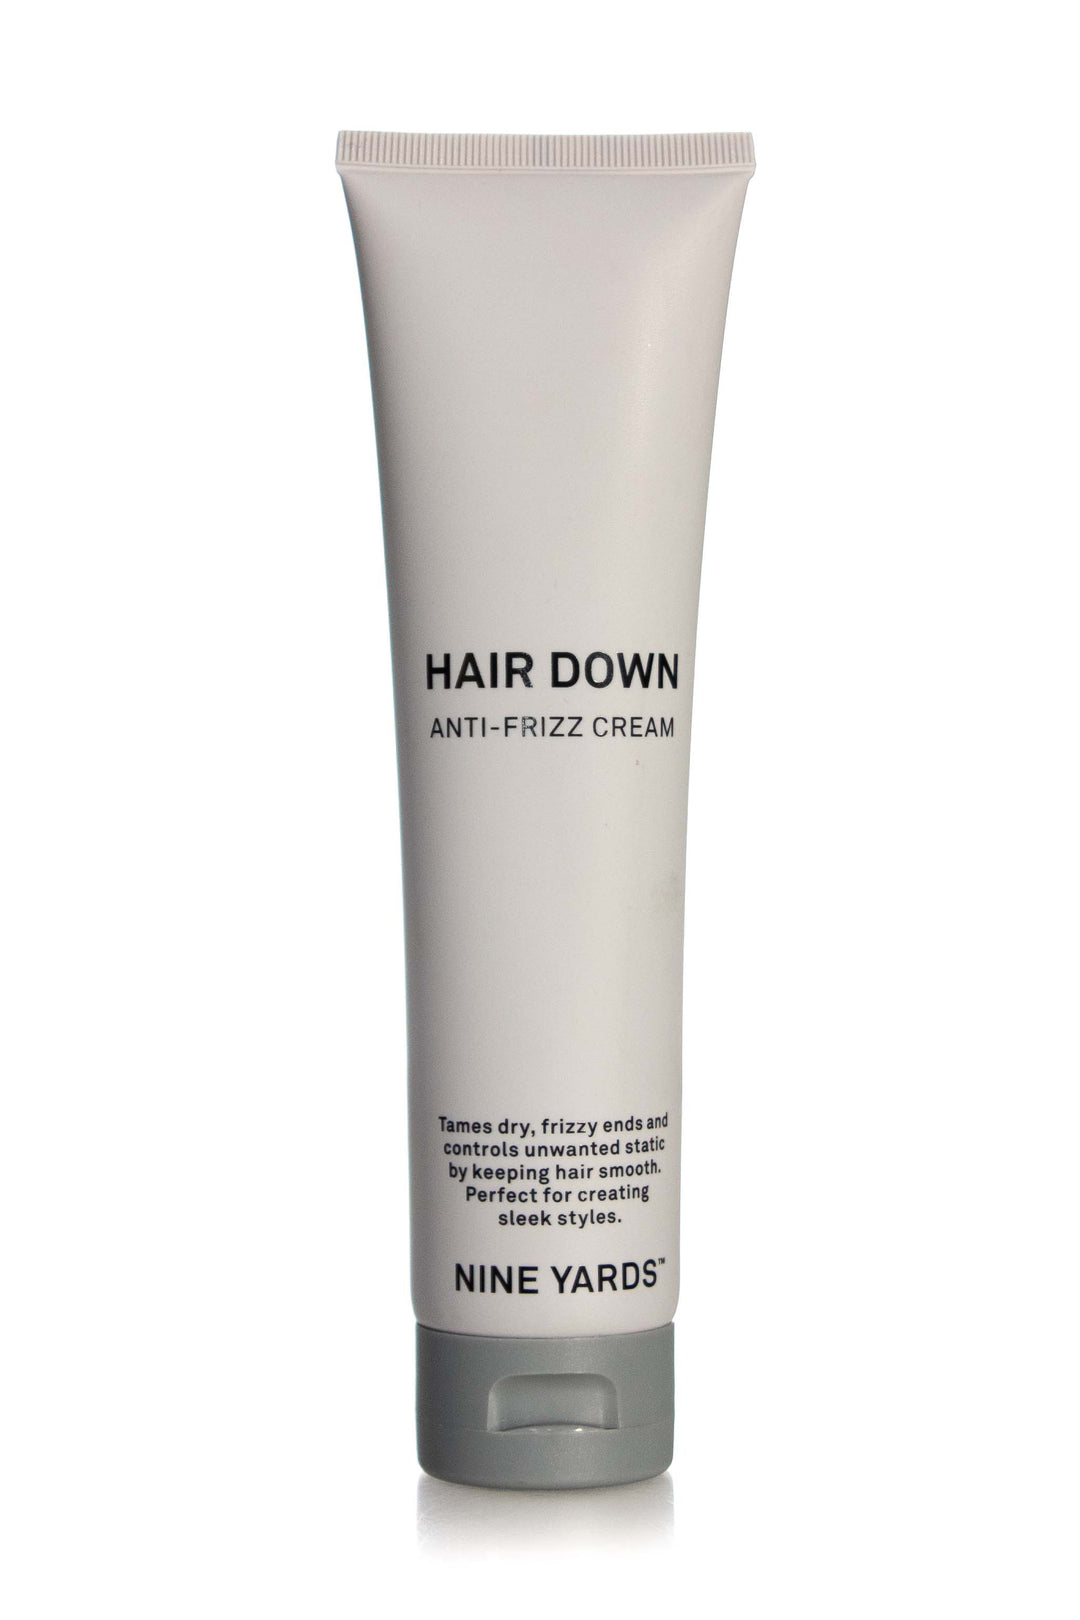 Nine Yards Hair Down Anti-Frizz Cream